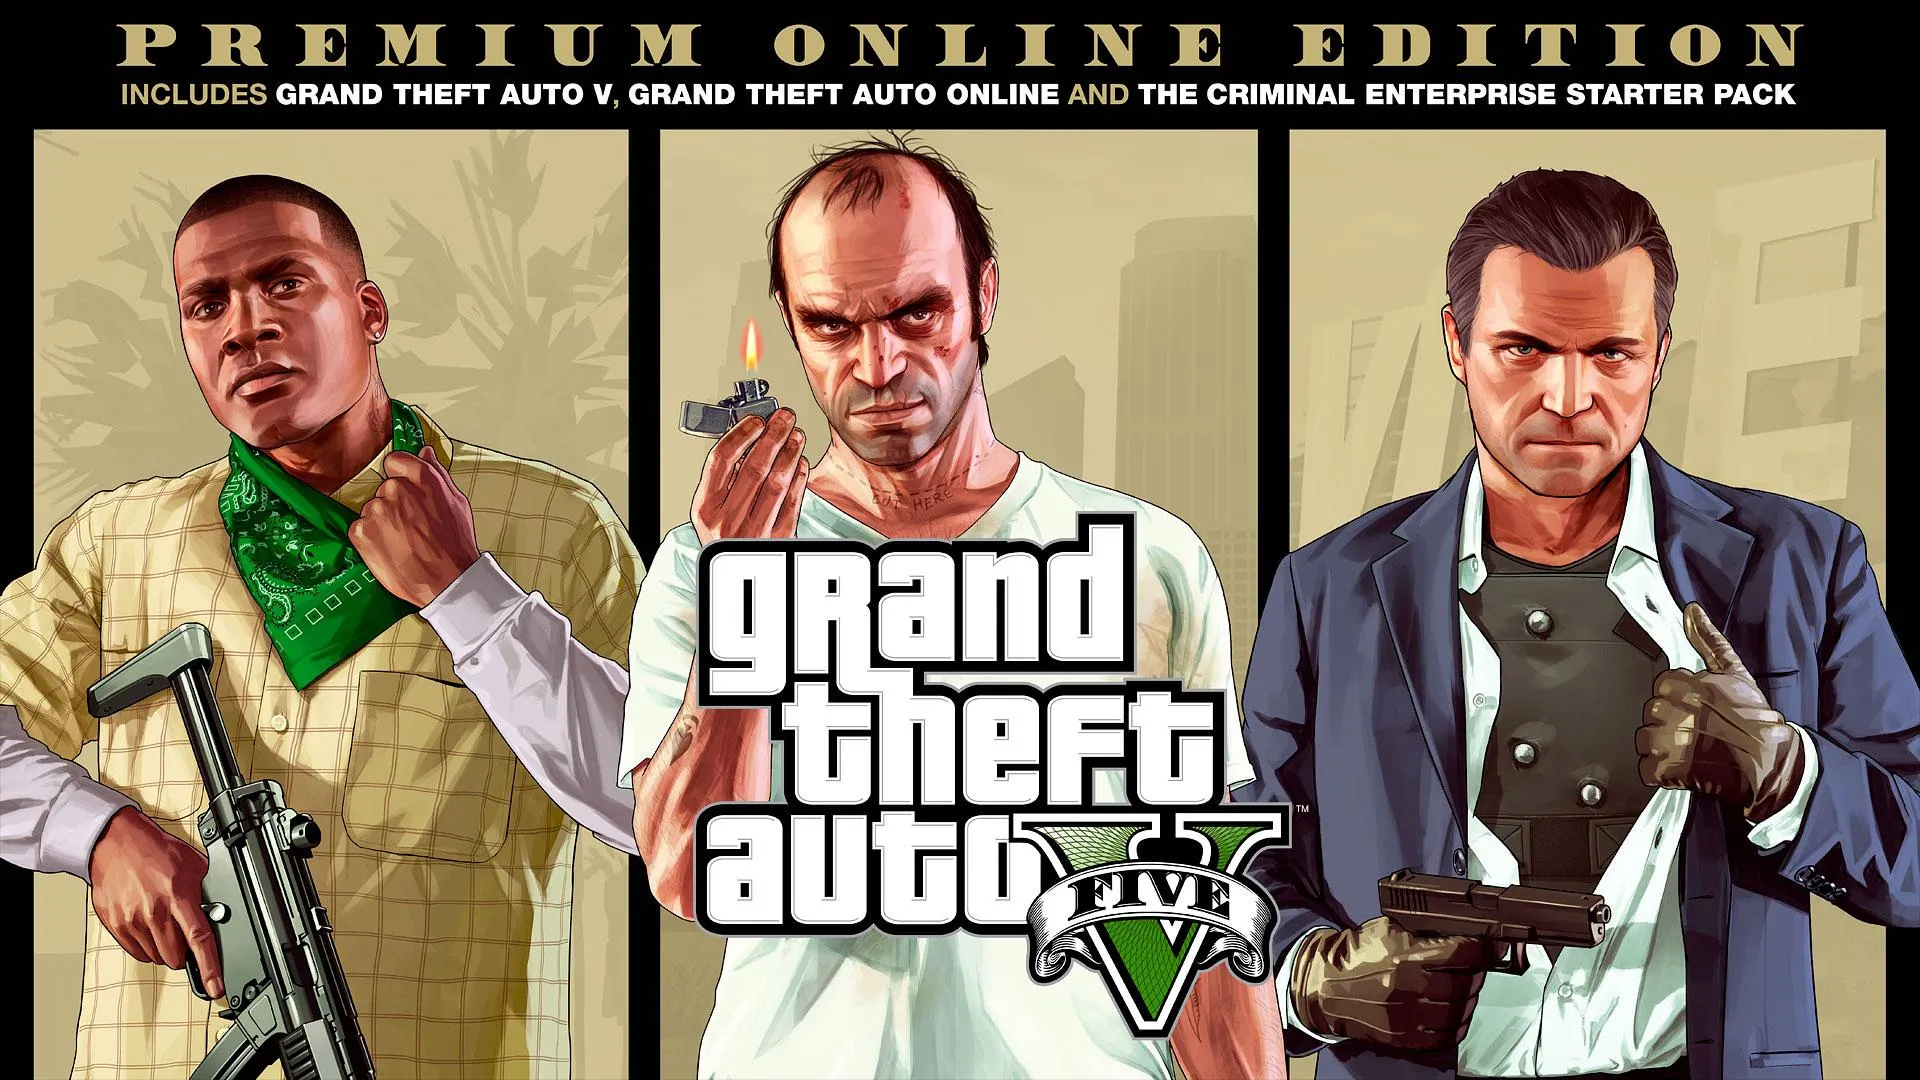 Grand Theft Auto V Premium Online Edition - Includes Criminal Enterprise Starter Pack